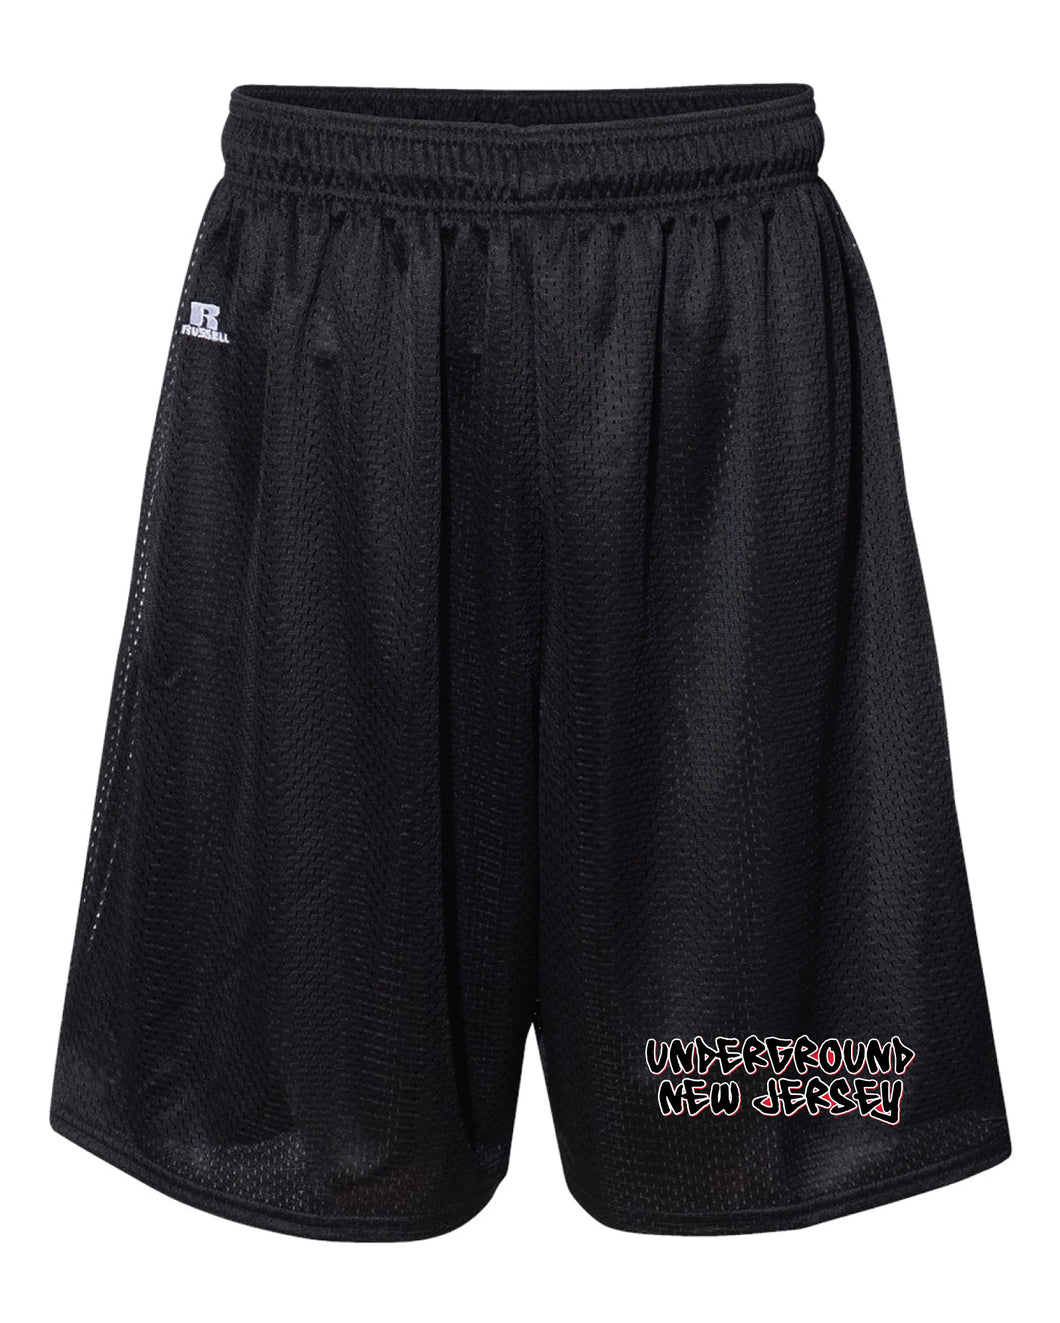 NJ Underground Wrestling Club Russell Athletic  Tech Shorts - Black - 5KounT2018